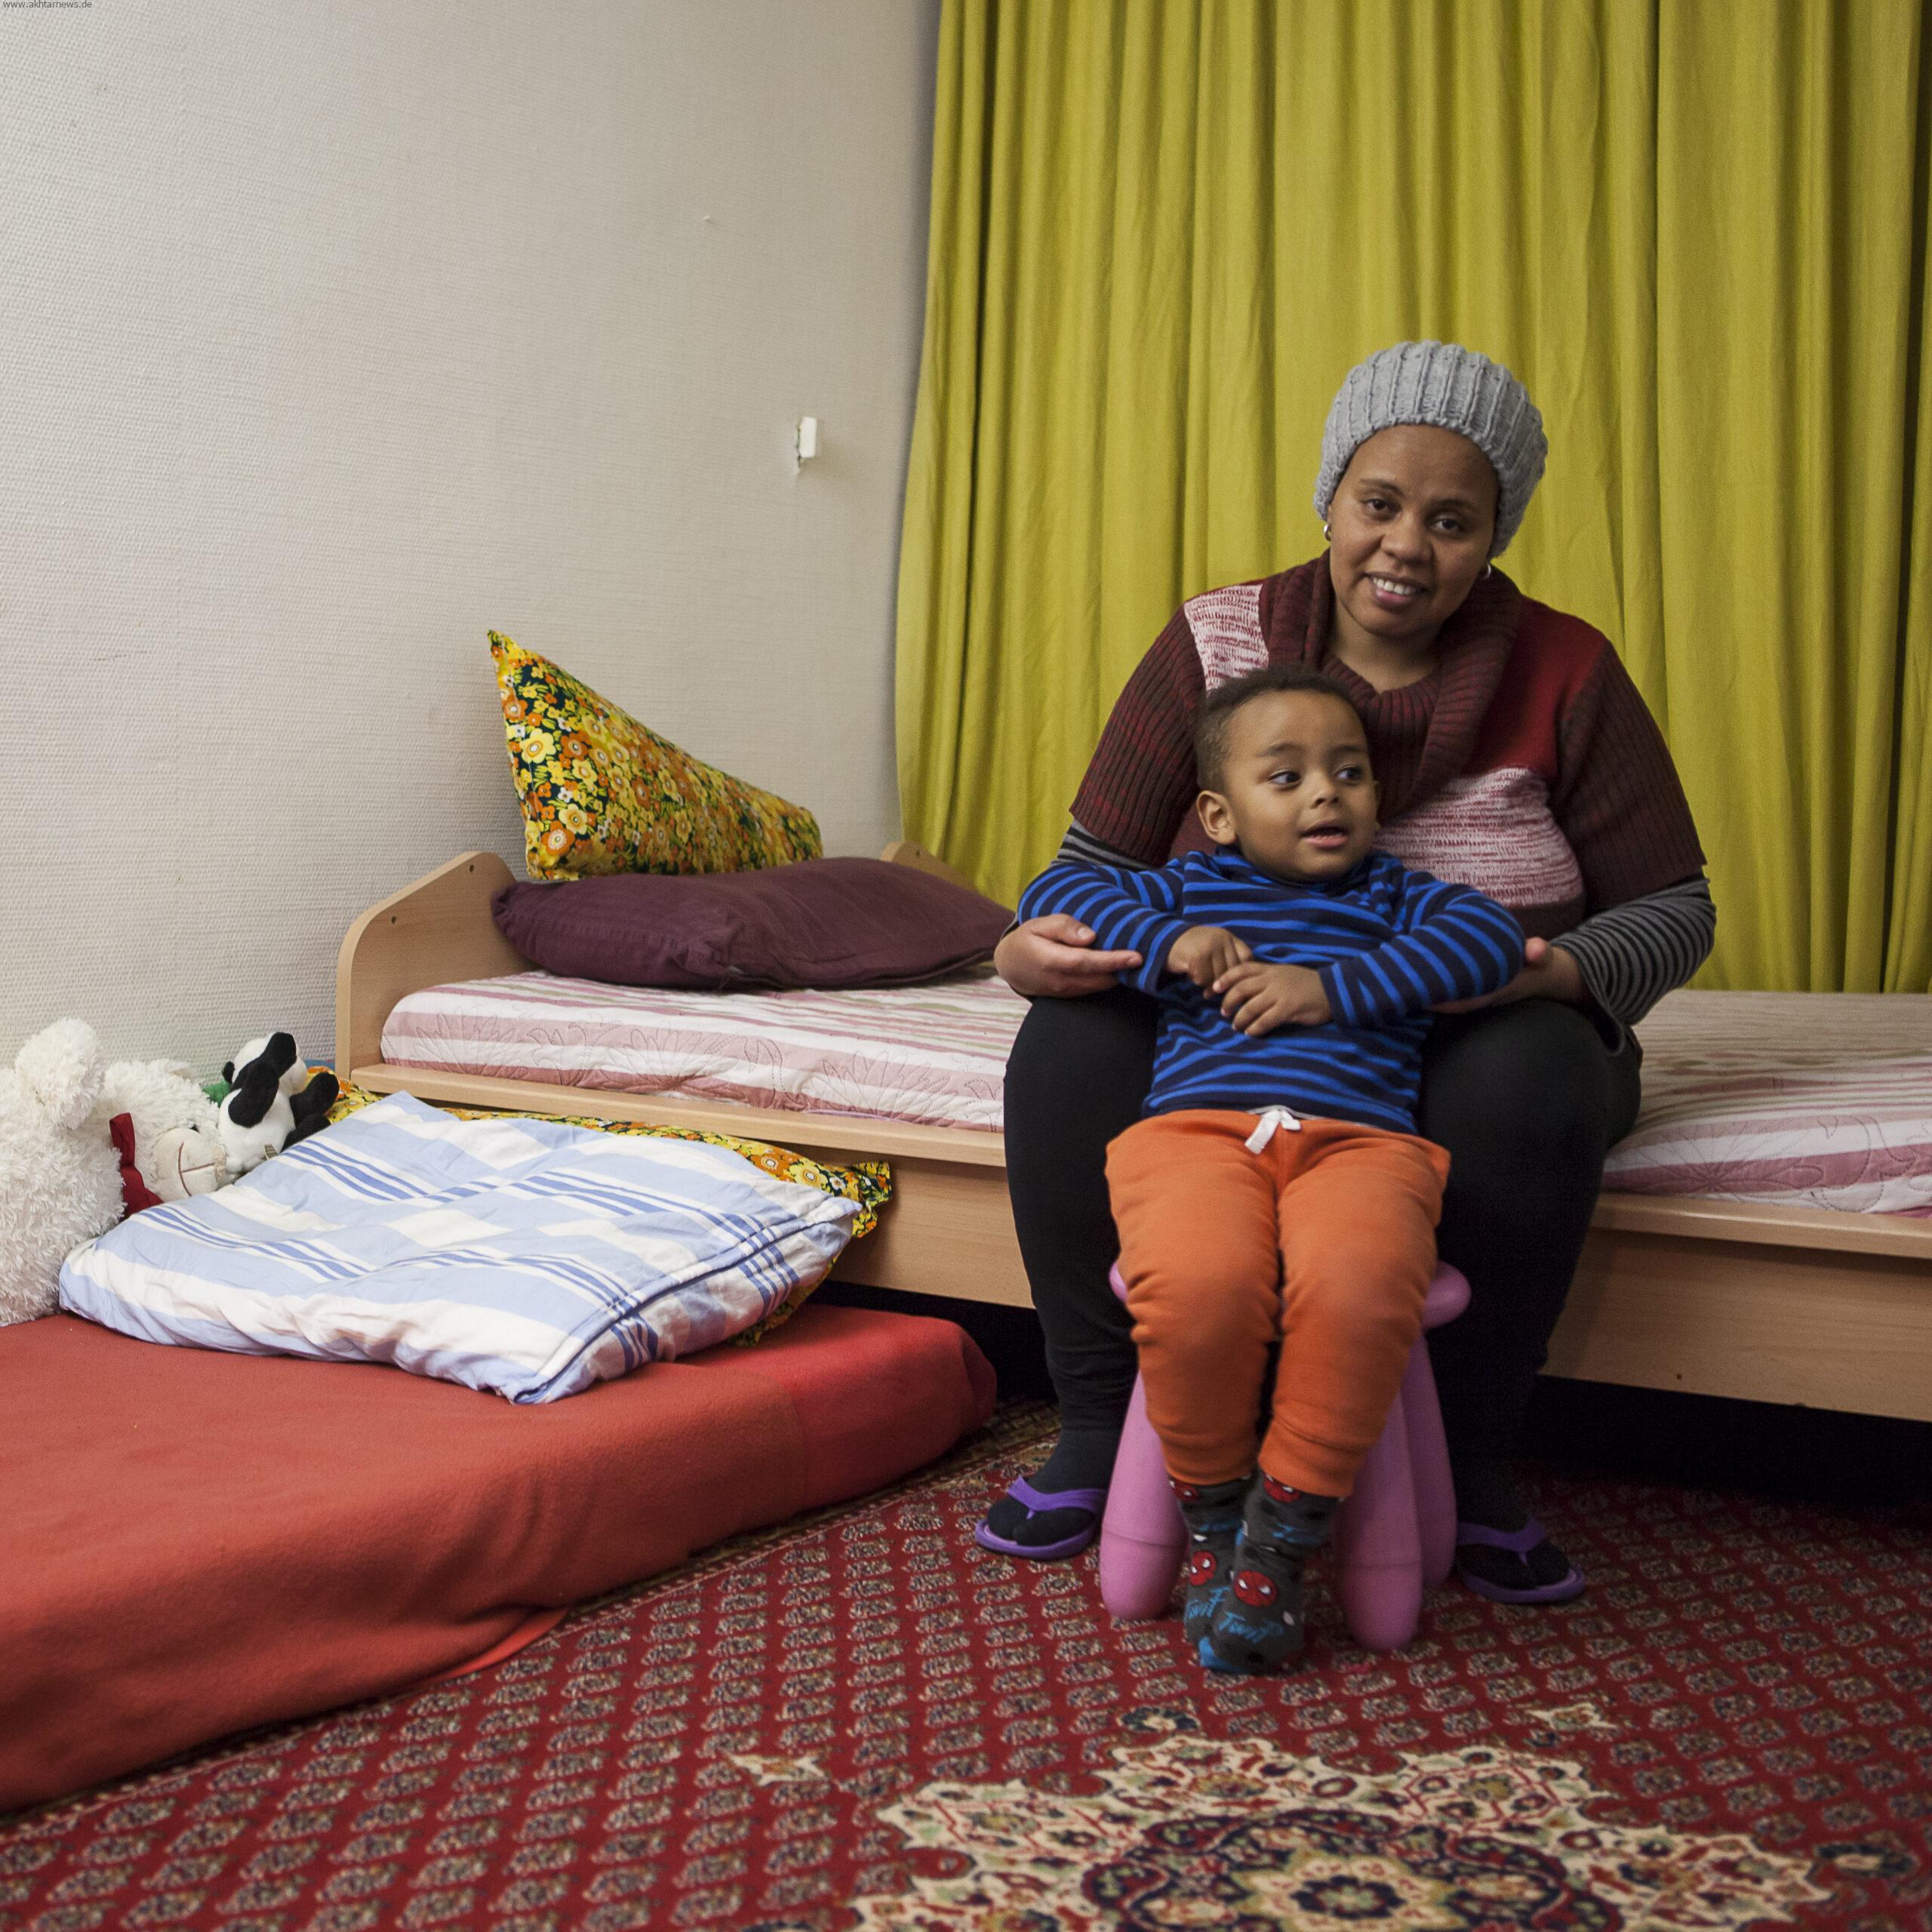 Eadum 37 ساله .اهل کشور اتیوپی . حدود 5 سال پیش از طریق دریا وارد اروپا شد و سپس در آلمان اعلام پناهندگی کرد . او هنوز در کمپی در شهر هاملبورگ زندگی میکند  او ازدواج کرده و پسری سه ساله دارد بنام بکا . او هم در این کمپ به دنیا آمد و زندگی میکند . 